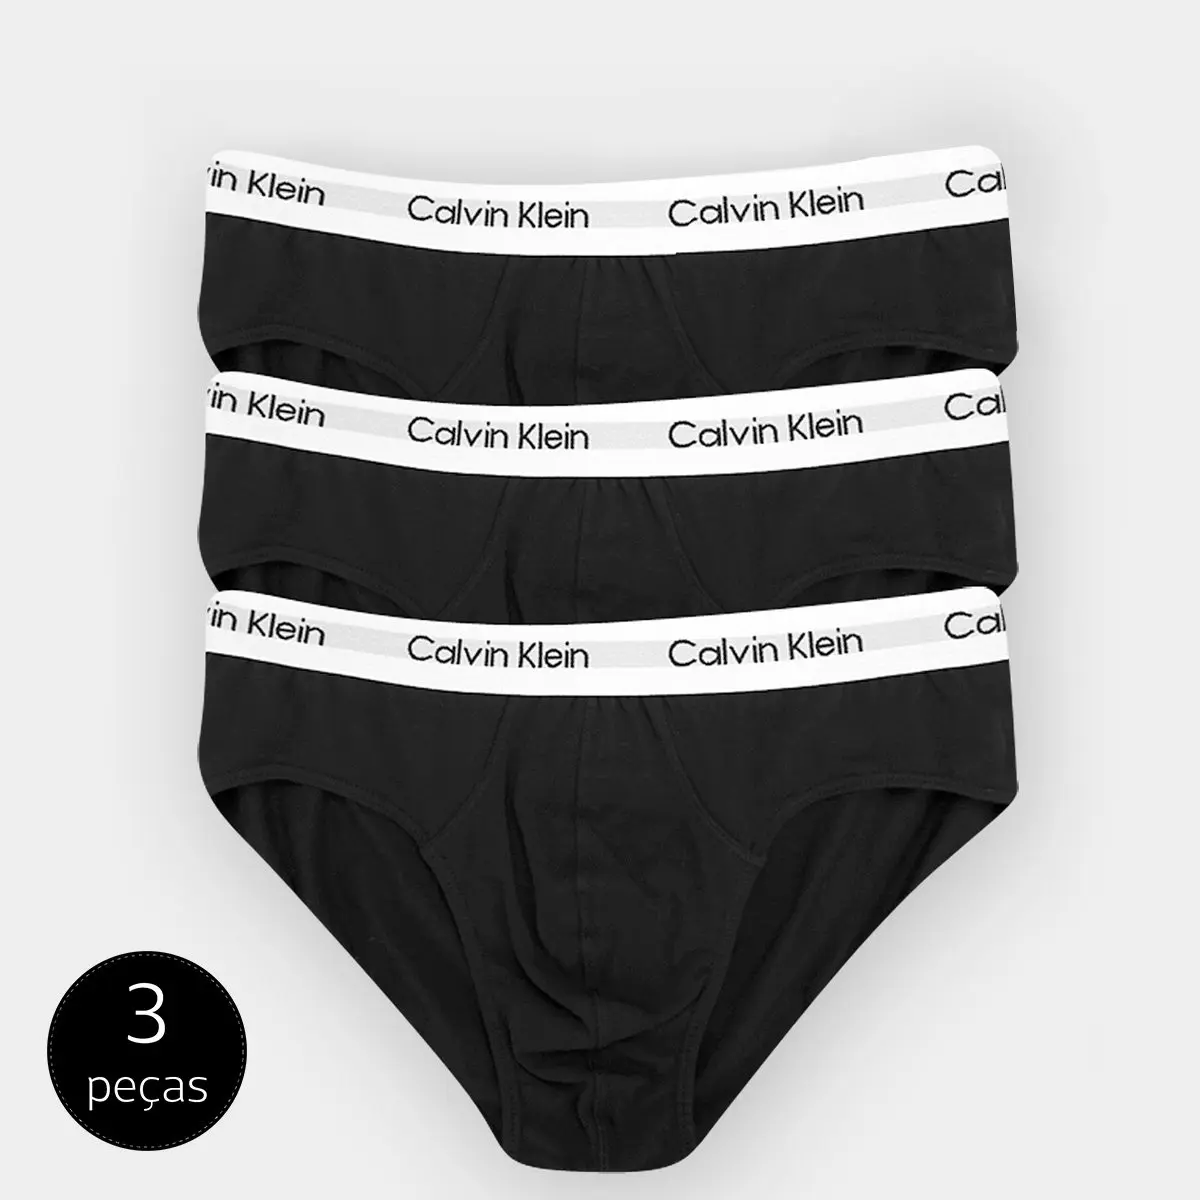 Cueca Calvin Klein Slip